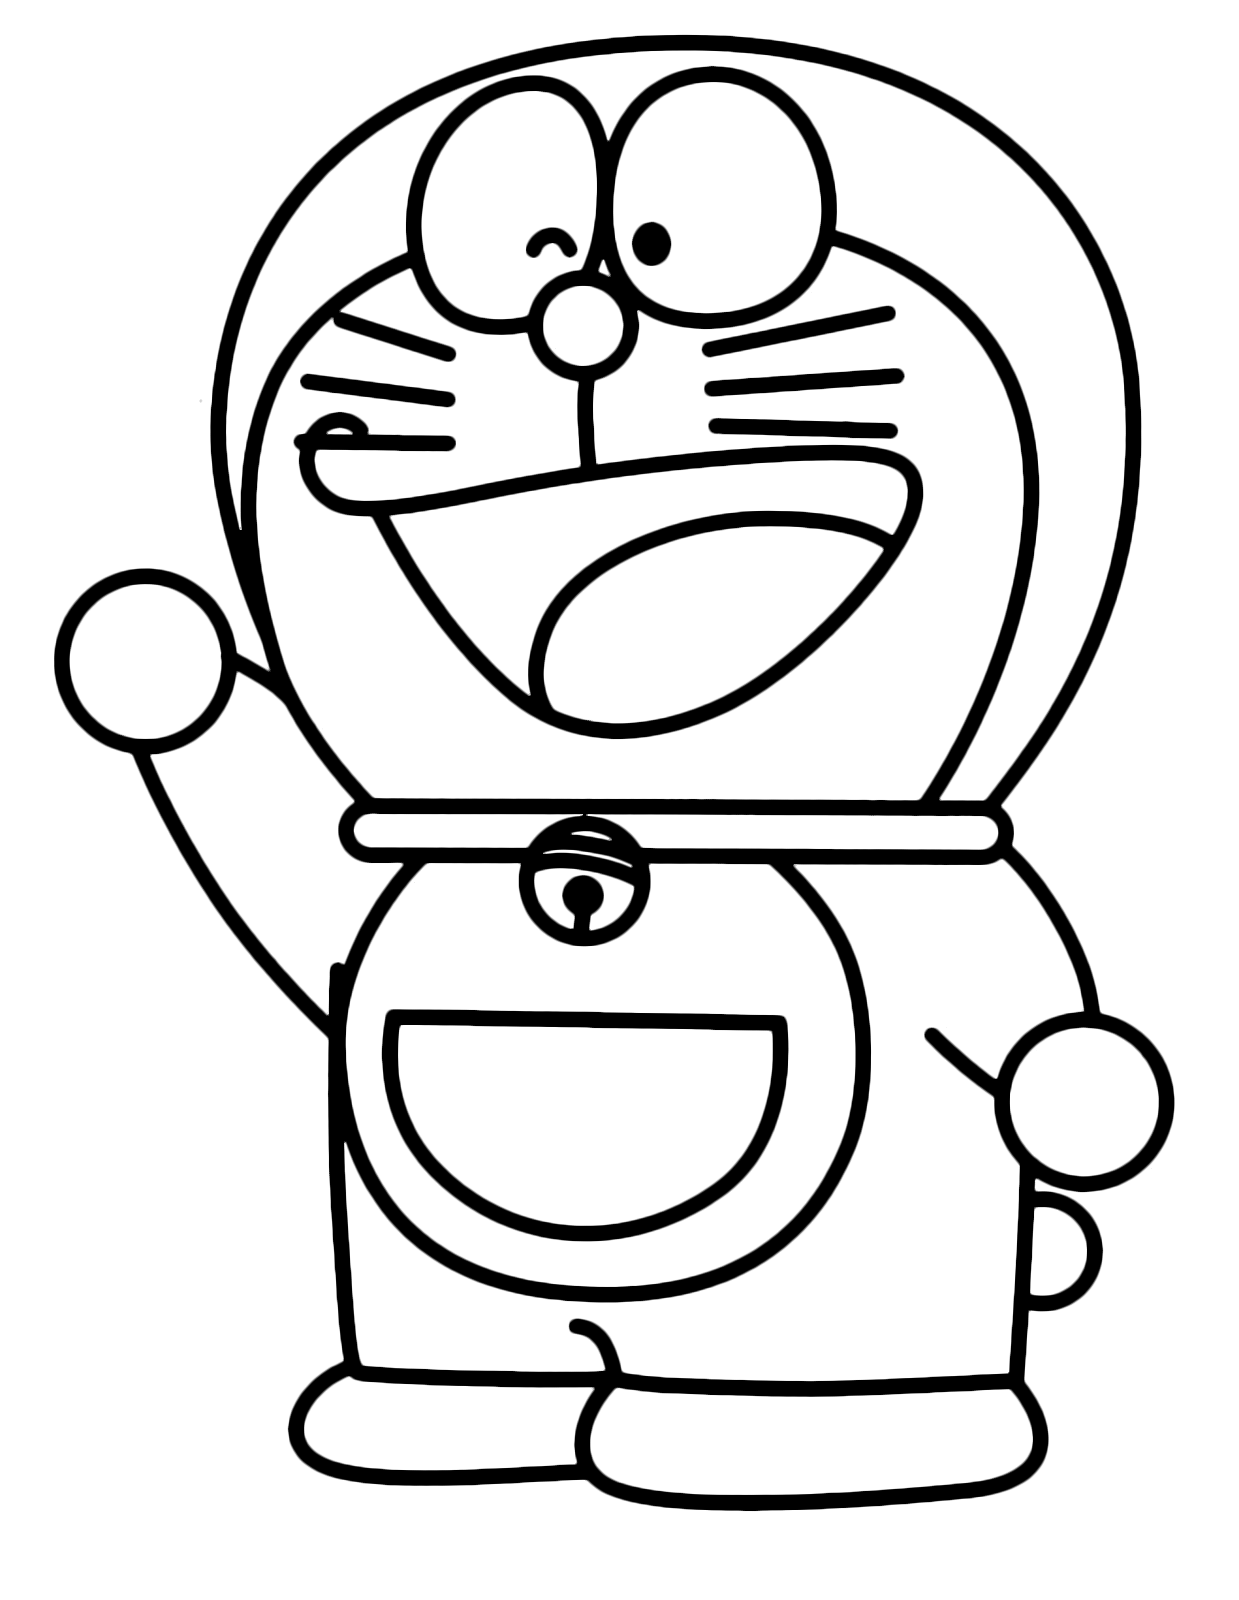 Gambar Keren Kartun Lucu Xd83dxdc95 Xd83dxdc95 Sketsa Gambar Kartun Doraemon Lucu Doraemon Hitam Putih